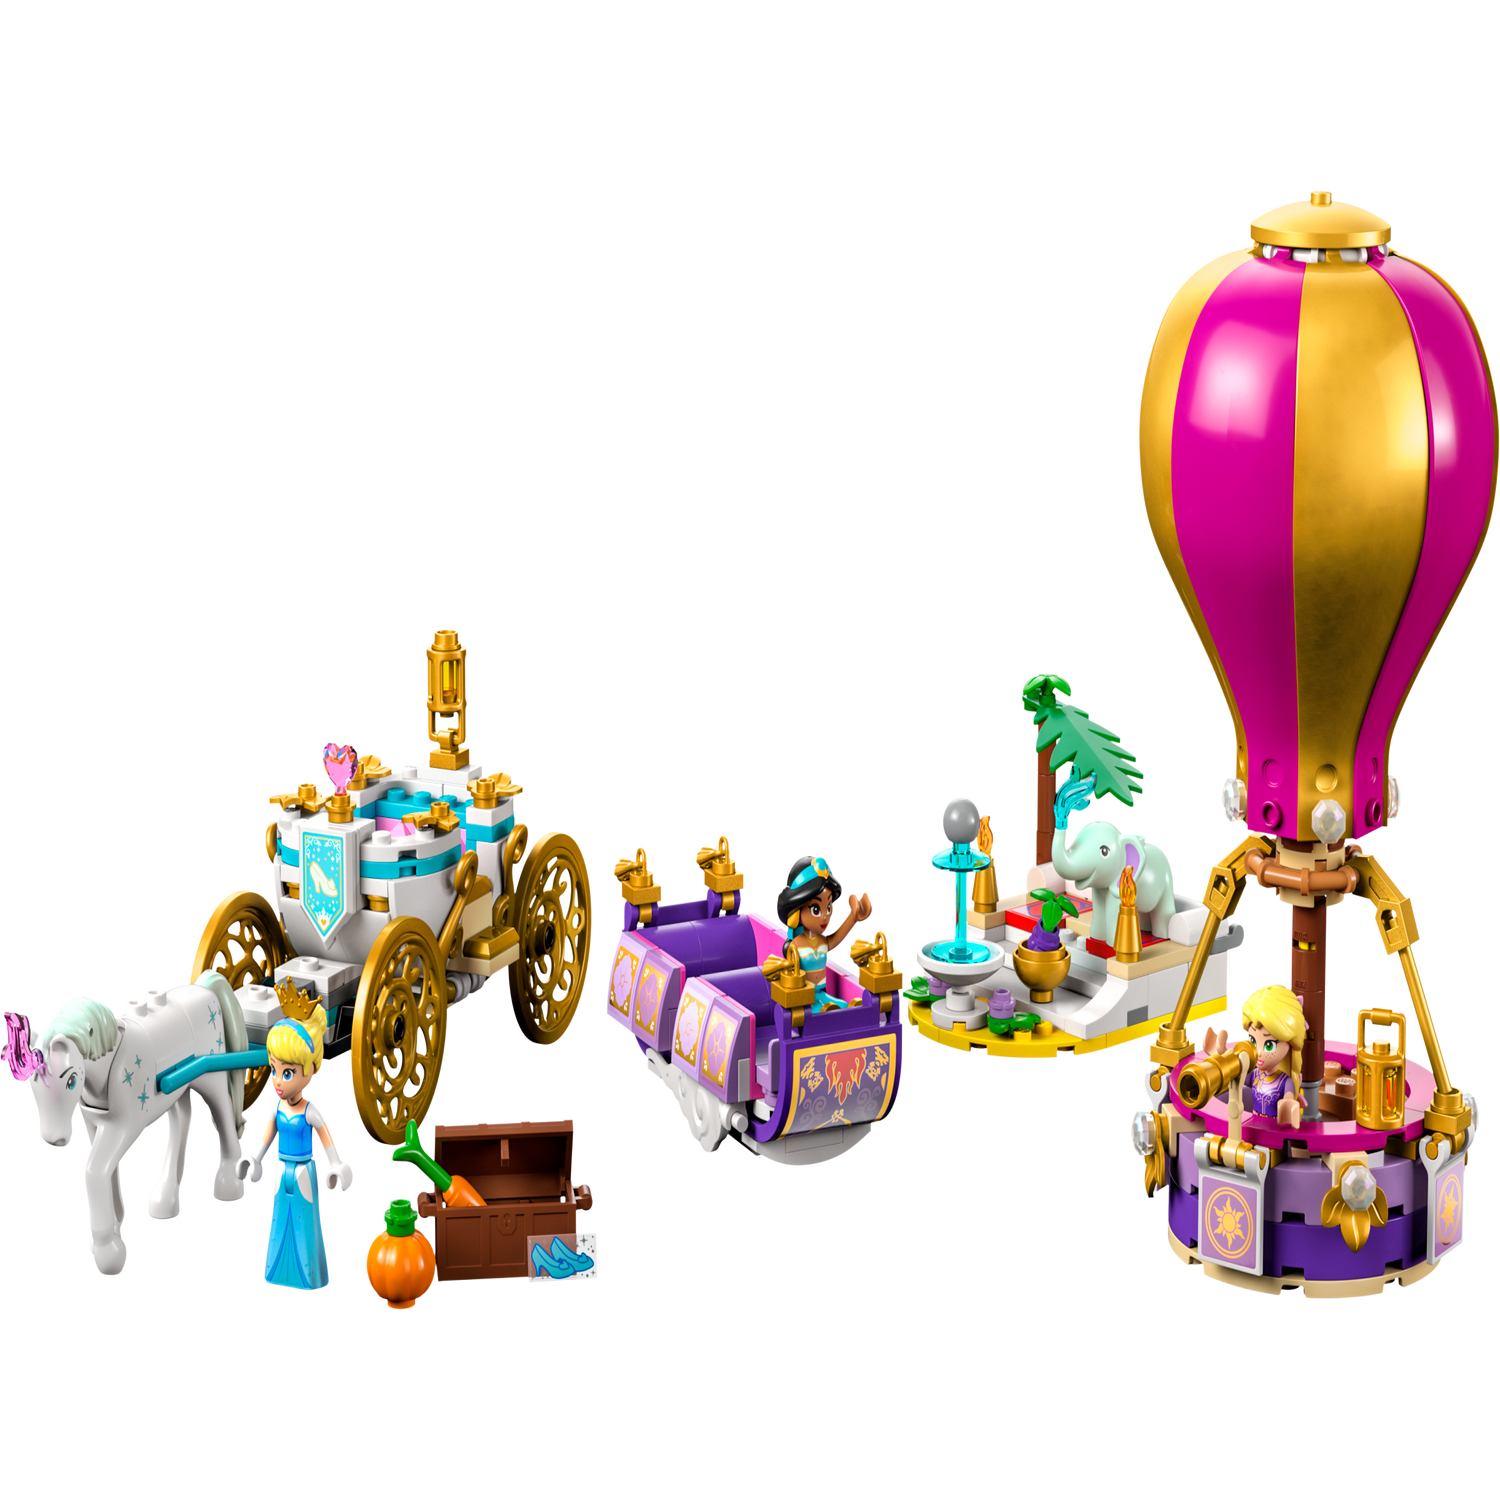 LEGO 43216 Disney Princess Princess Enchanted Journey, 3 mini-doll